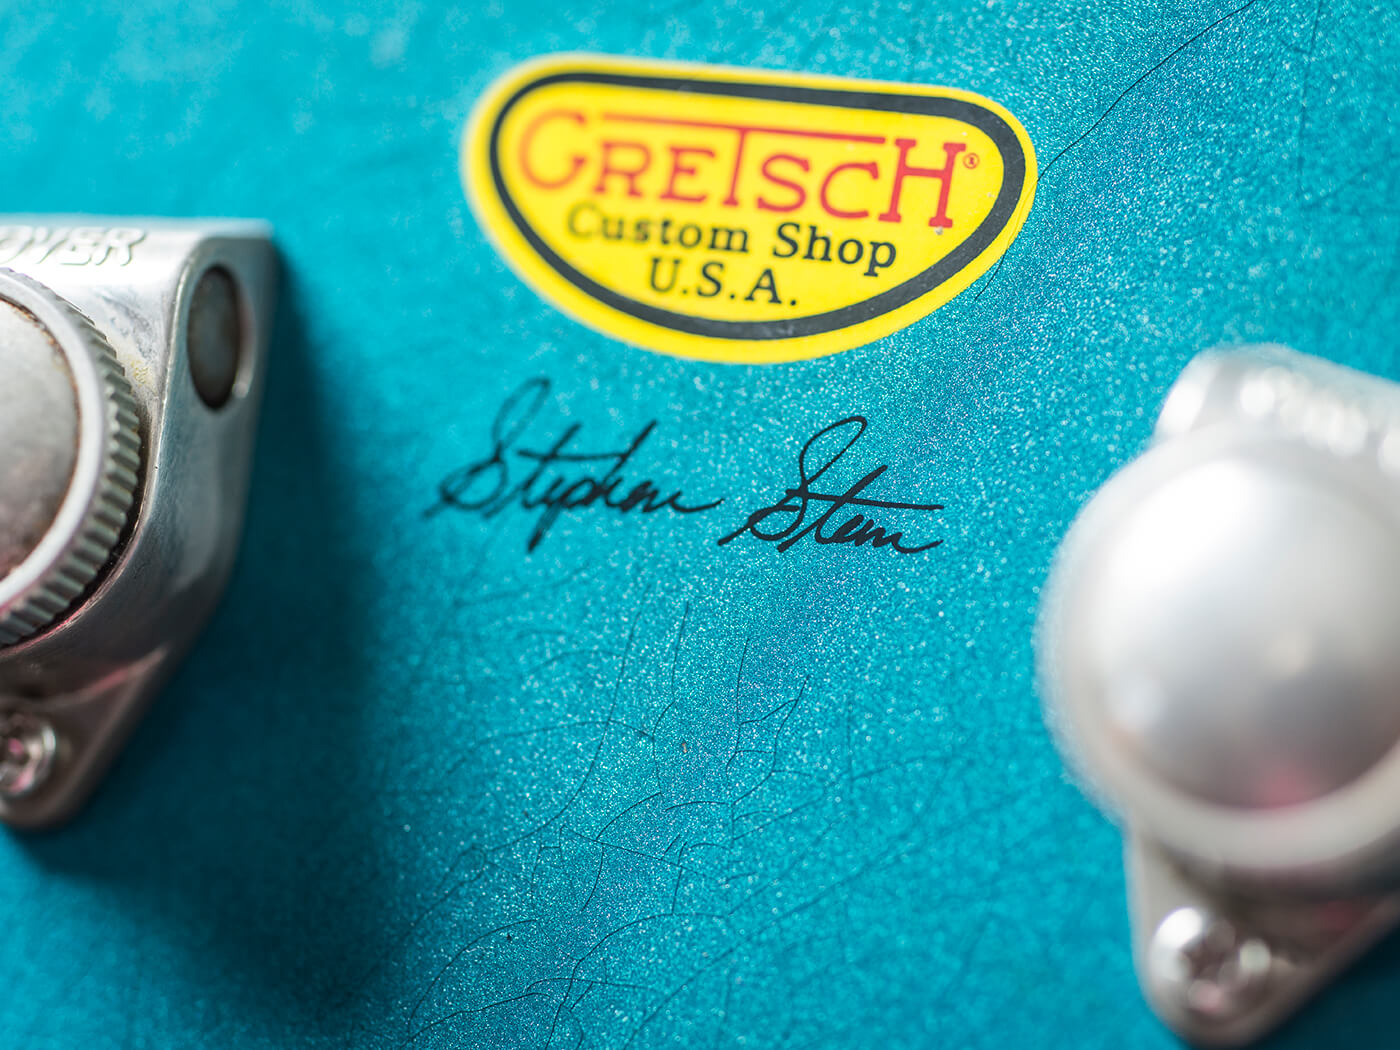 Scott Holiday's Gretsch Custom Shop Stephen Stern Masterbuilt Blue Penguin (Headstock)